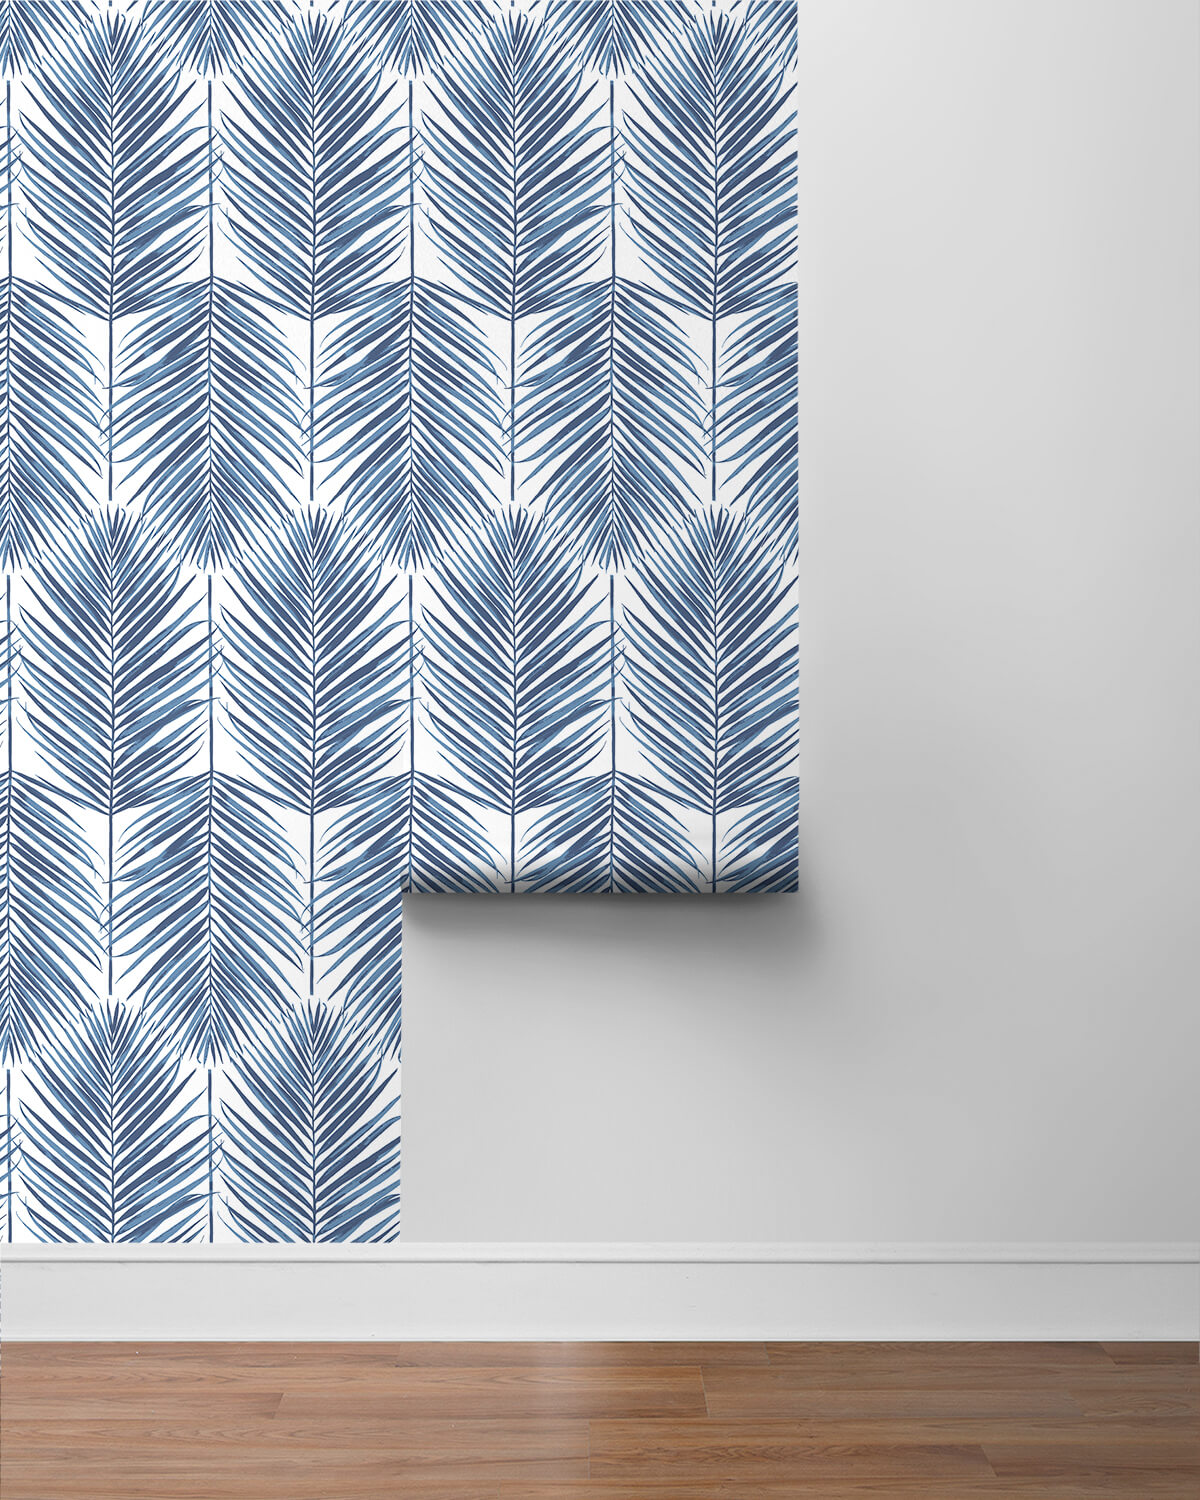 Seabrook Designs Paradise Palm Wallpaper - Coastal Blue